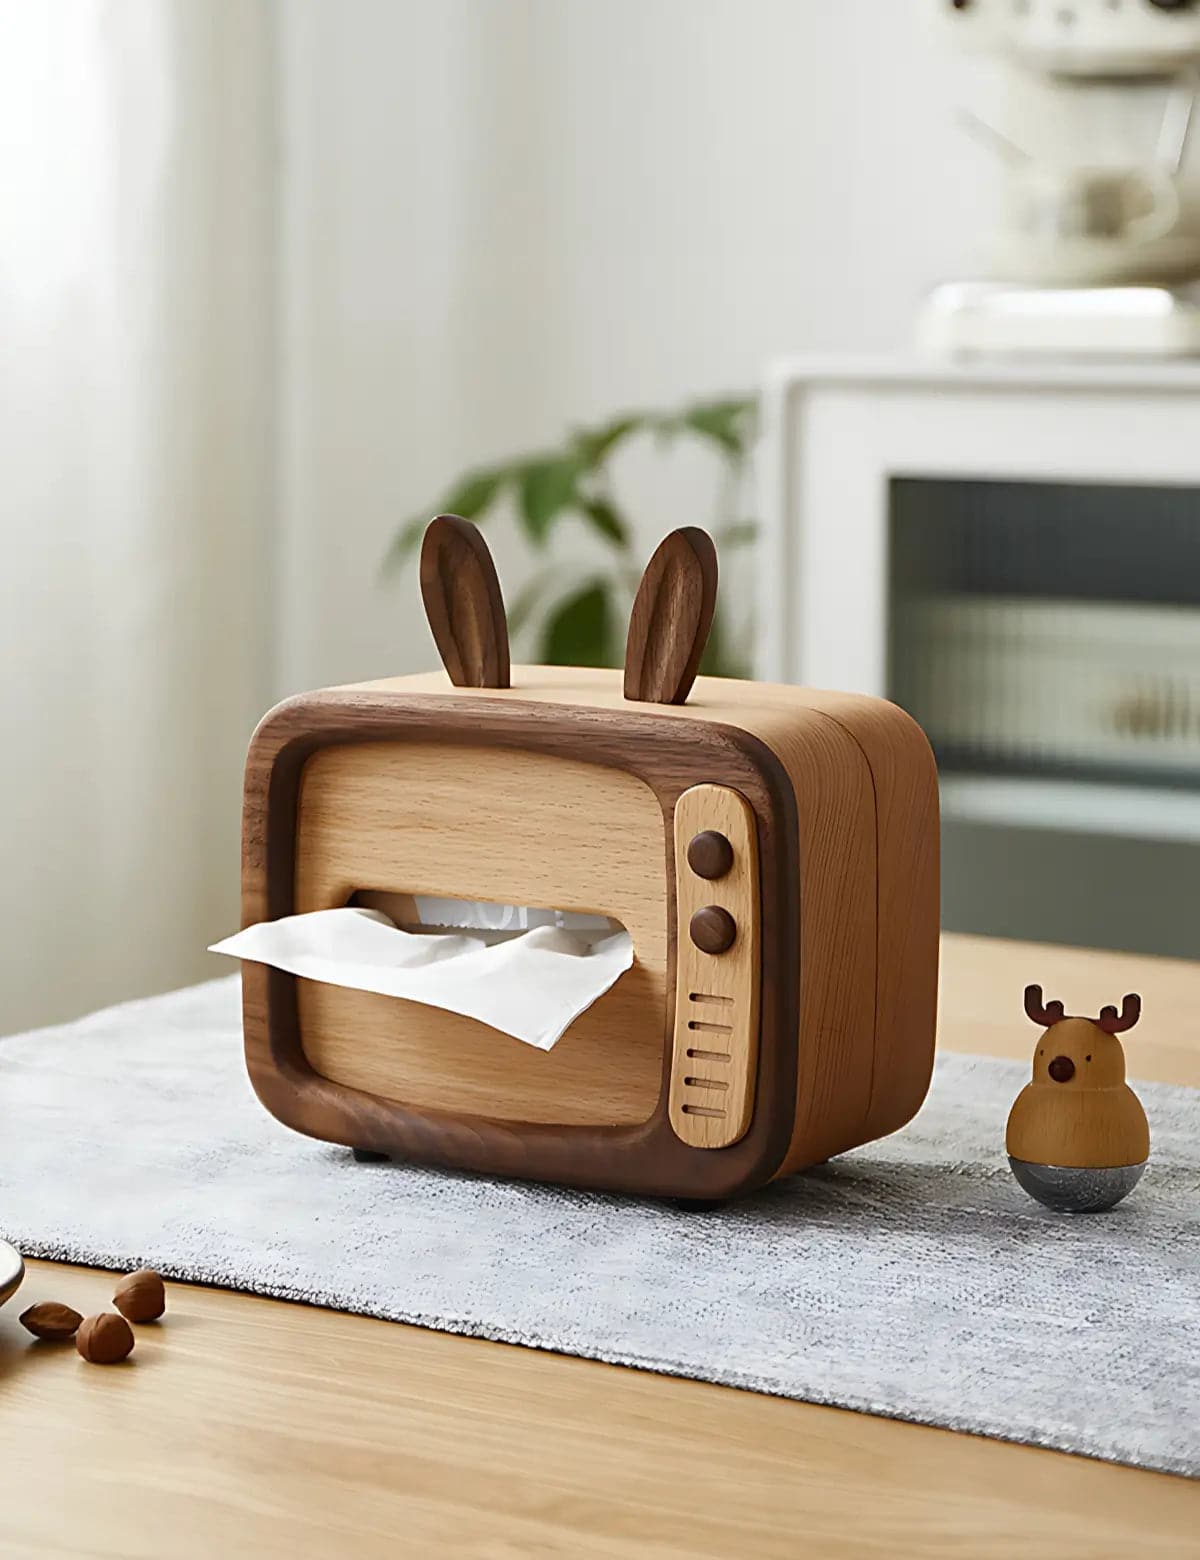 tv-rabbit-wooden-tissue-box-home-accessory-03